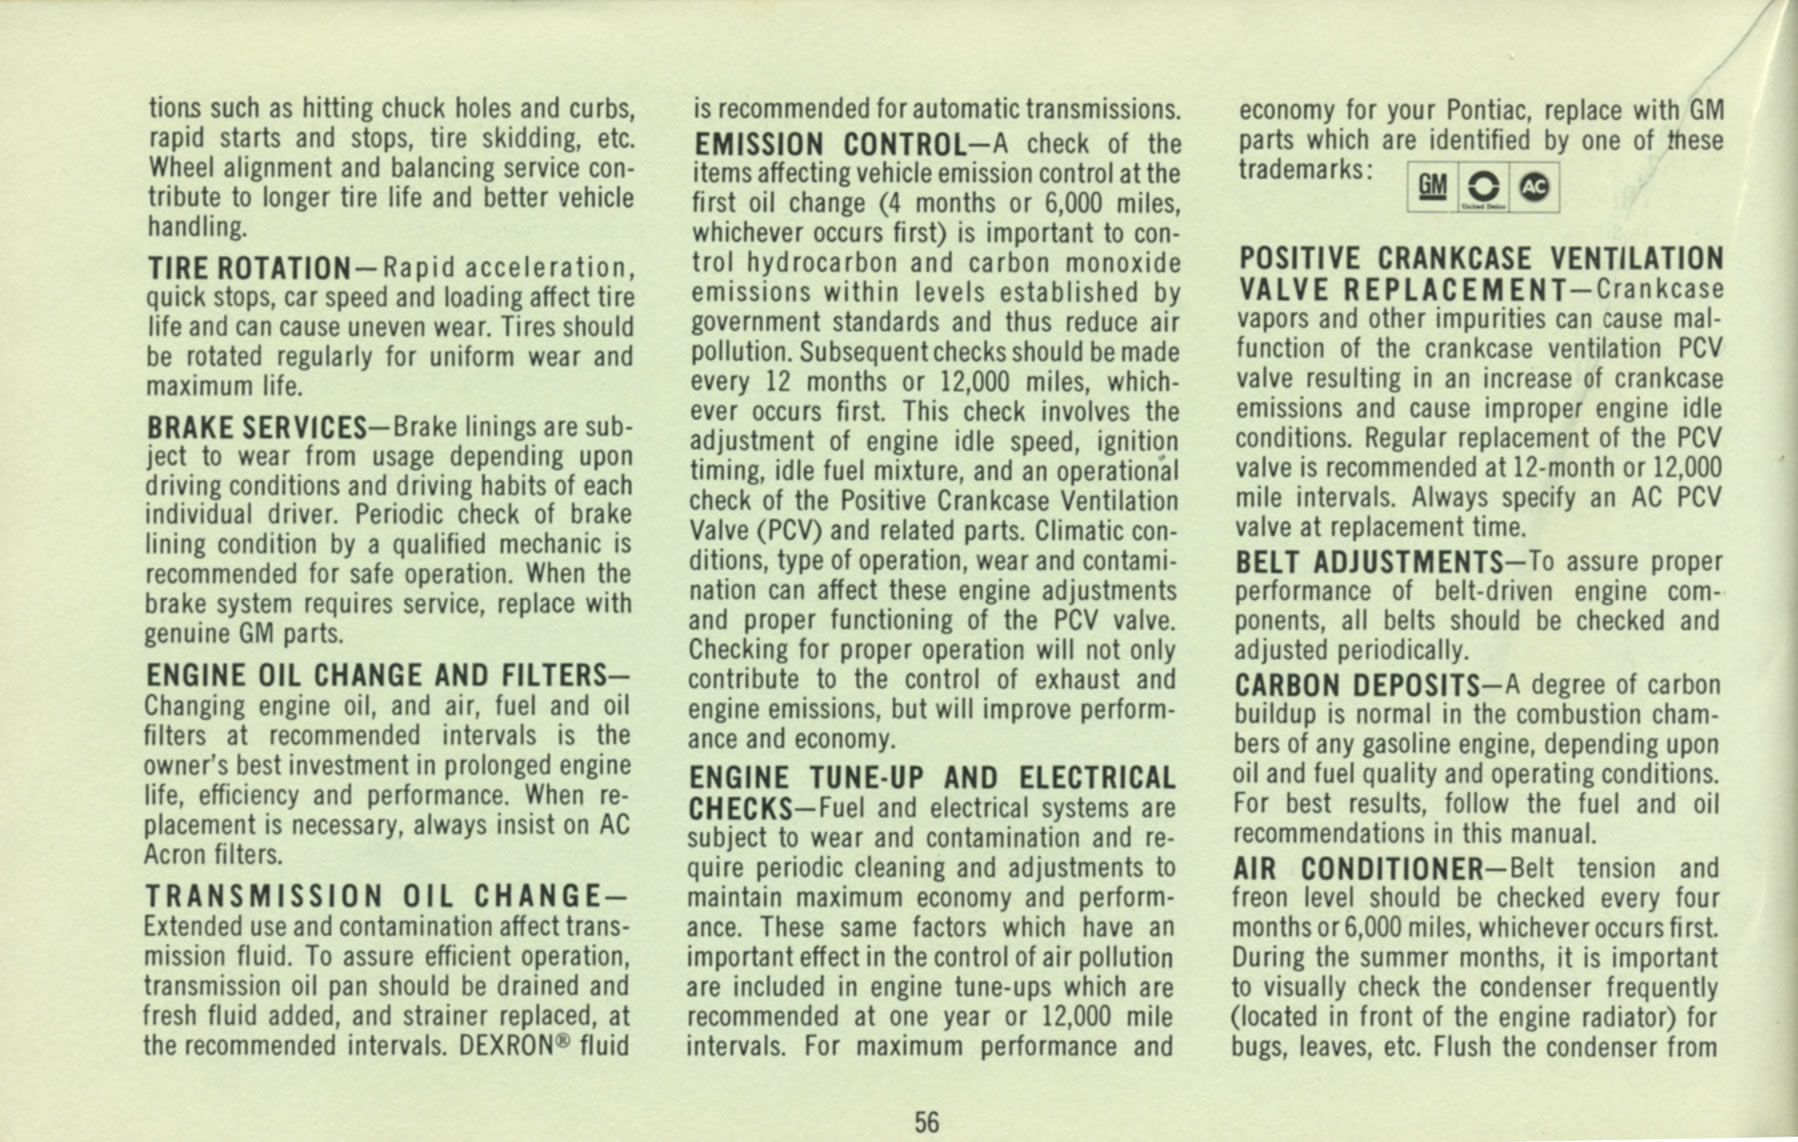 1969_Pontiac_Owners_Manual-56